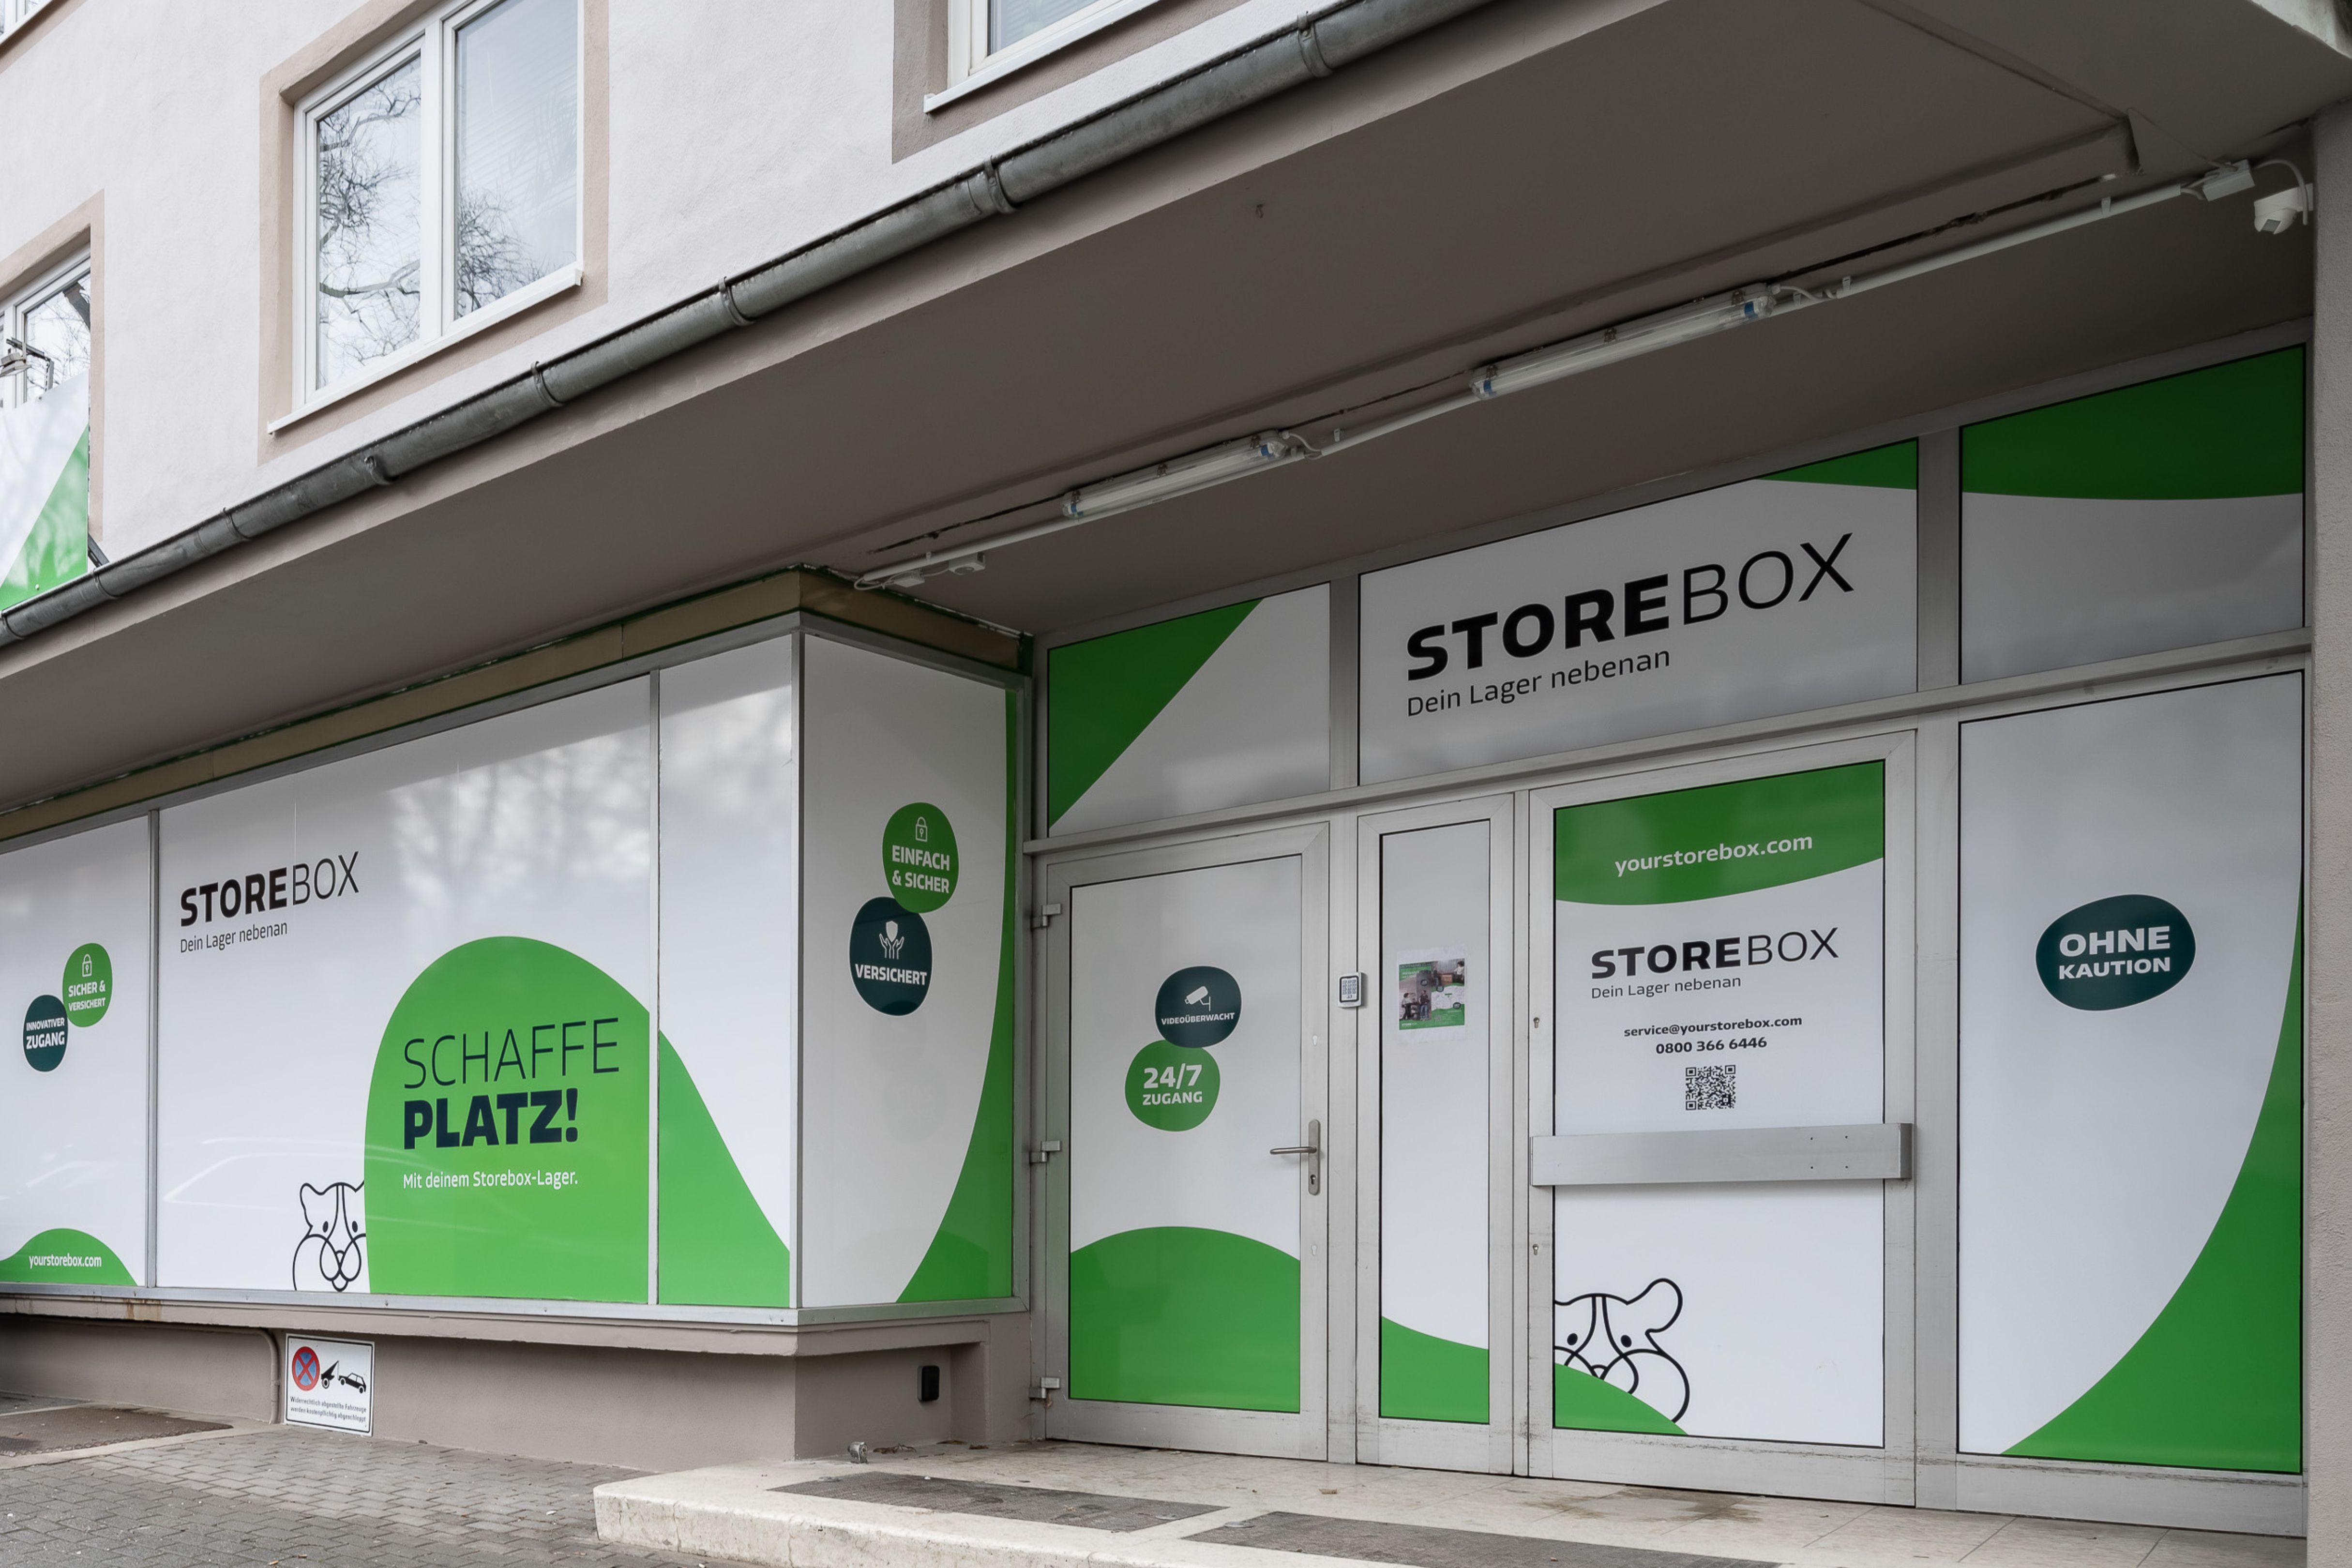 Storebox - Dein Lager nebenan, Seerobenstraße 9 in Wiesbaden